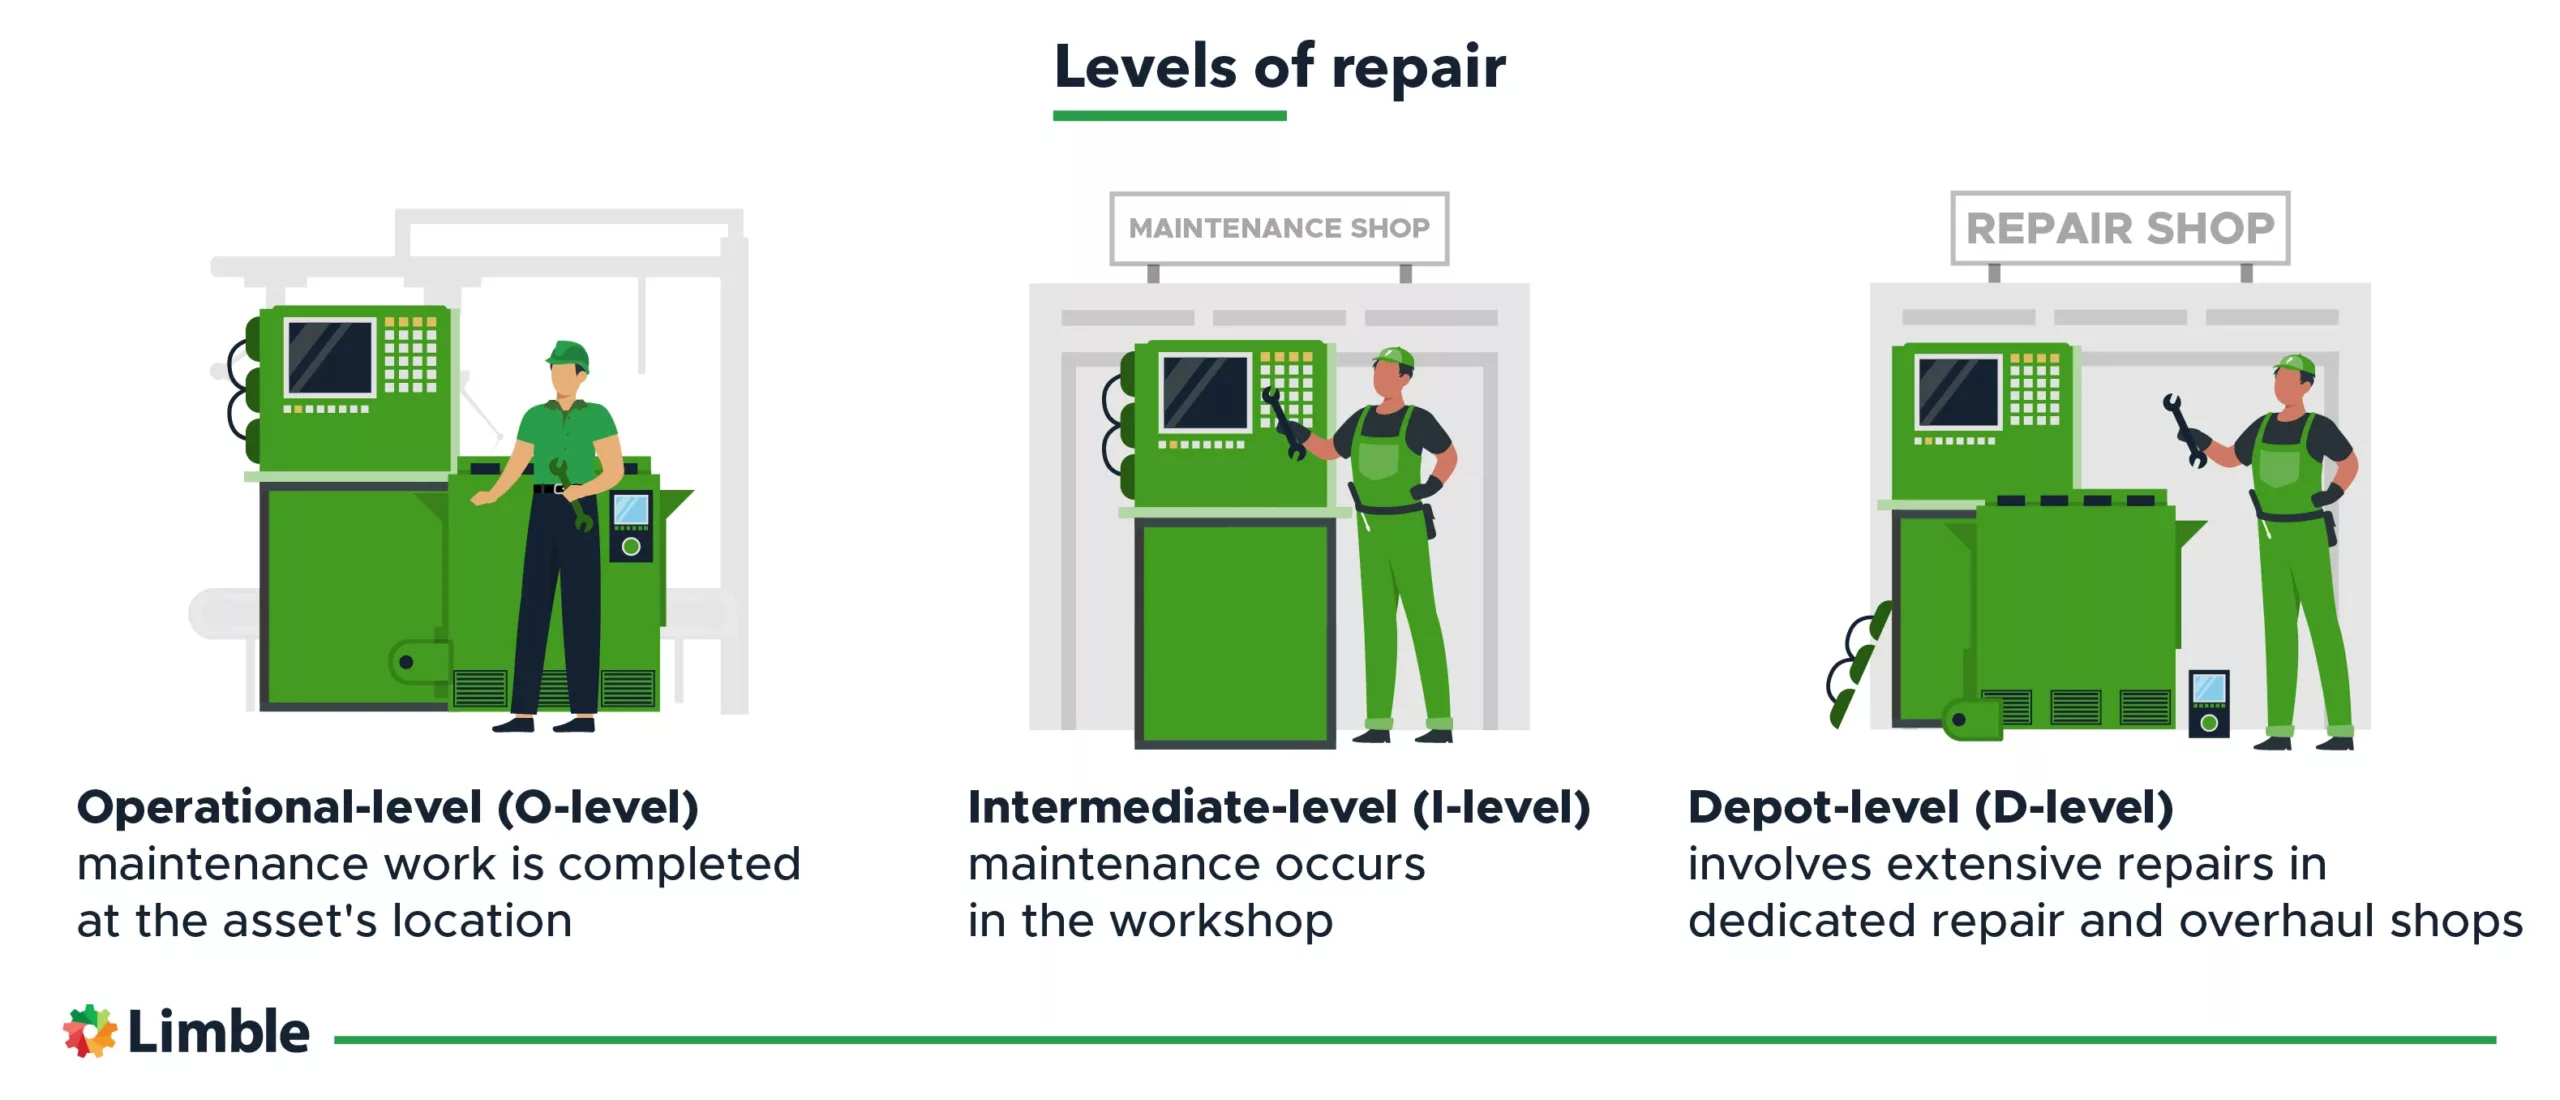 Different levels of repair - operational, intermediate, depot